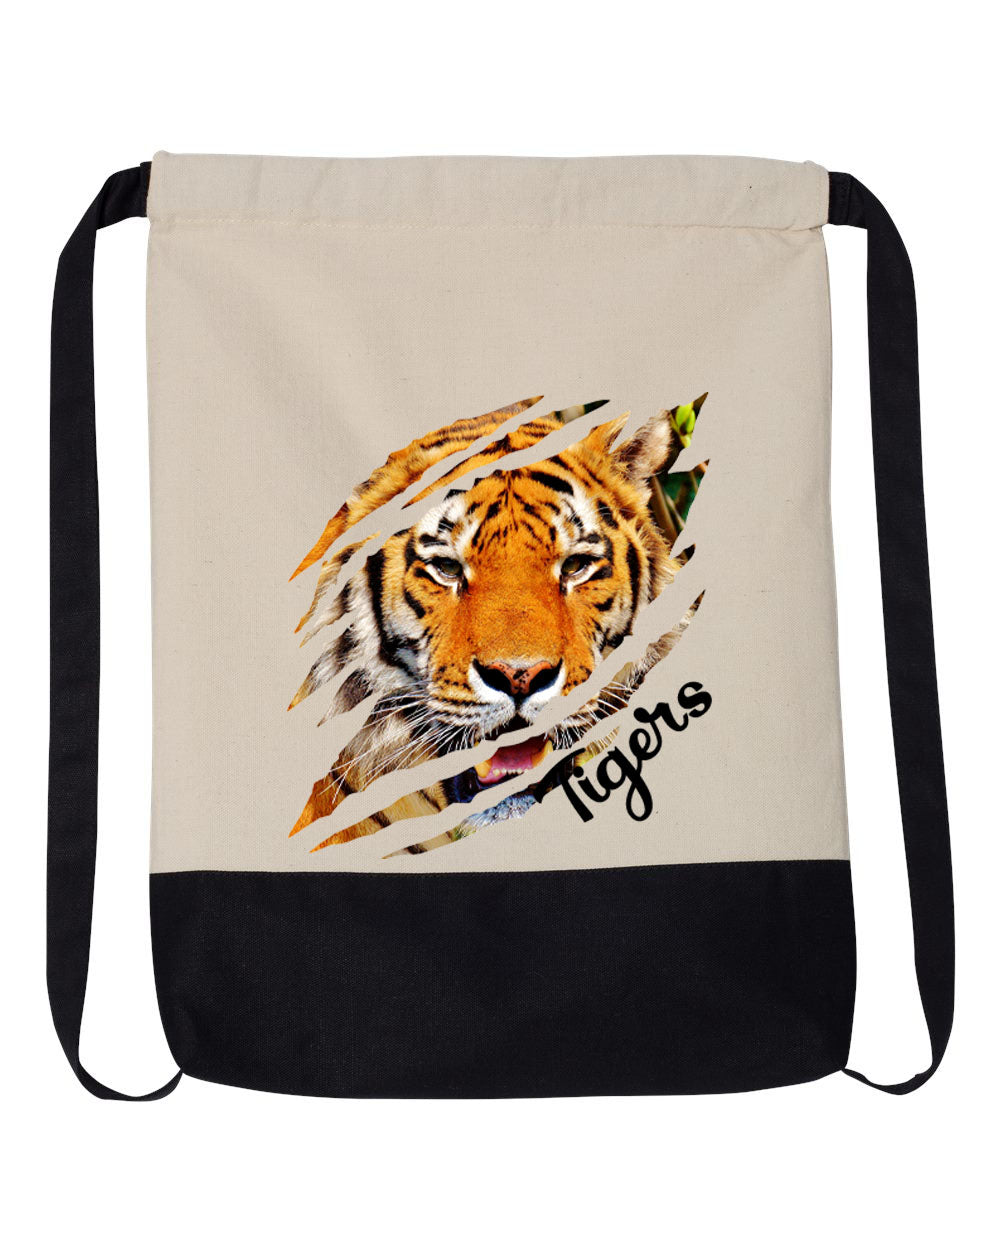 Lafayette Tigers Drawstring Bag Design 10